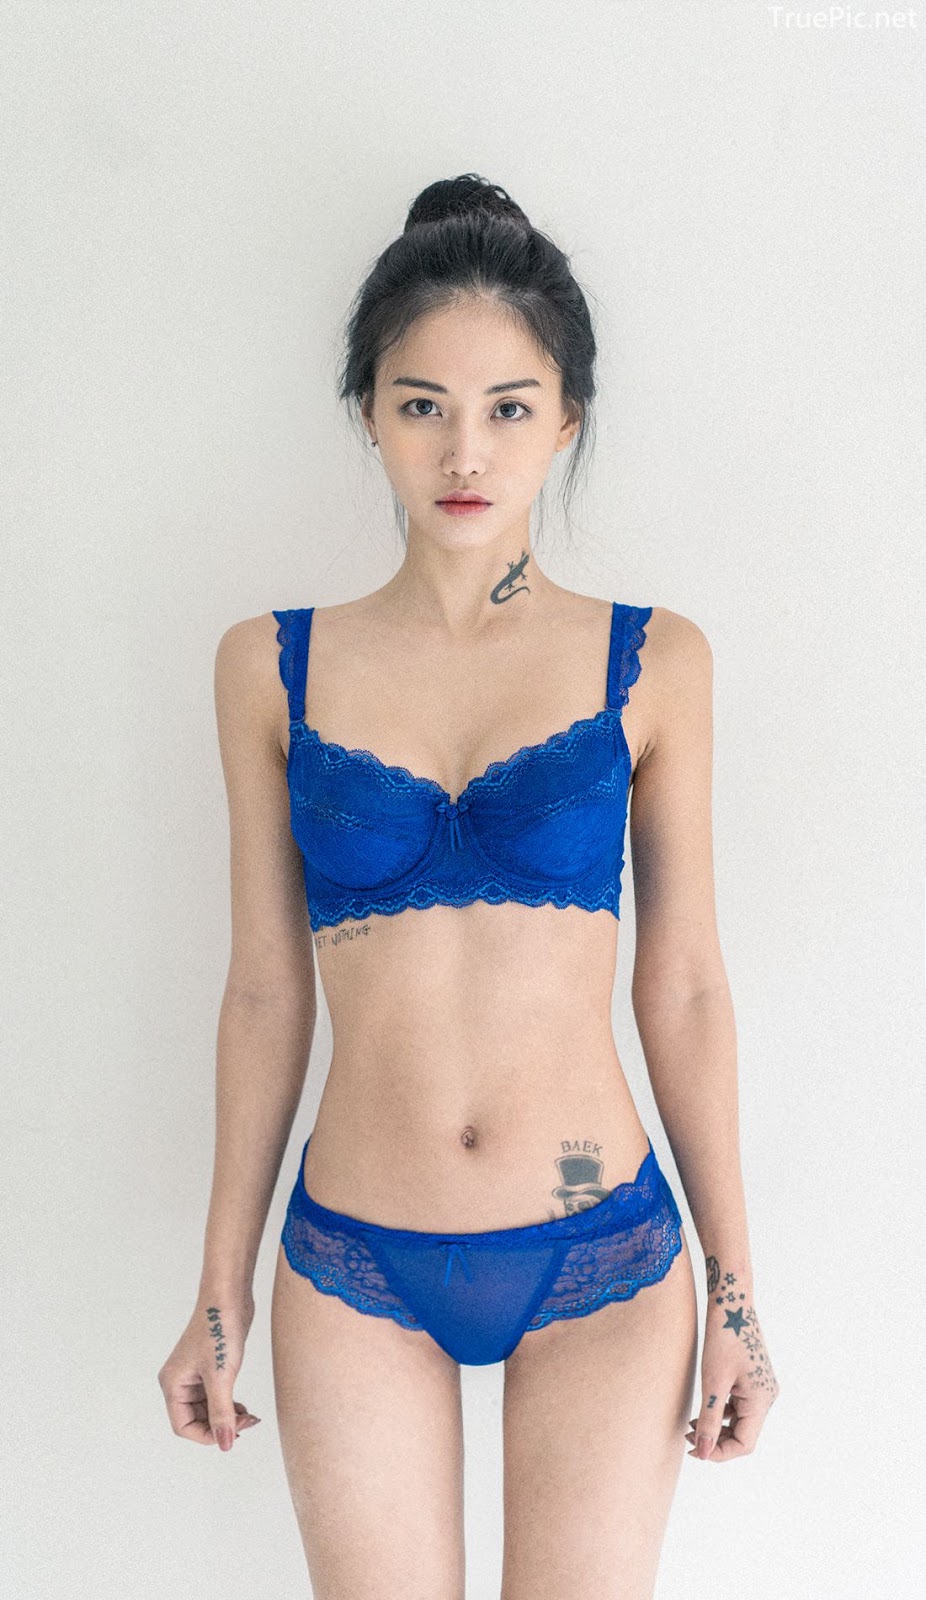 Korean Fashion Model - Baek Ye Jin - Sexy Lingerie Collection - TruePic.net - Picture 59